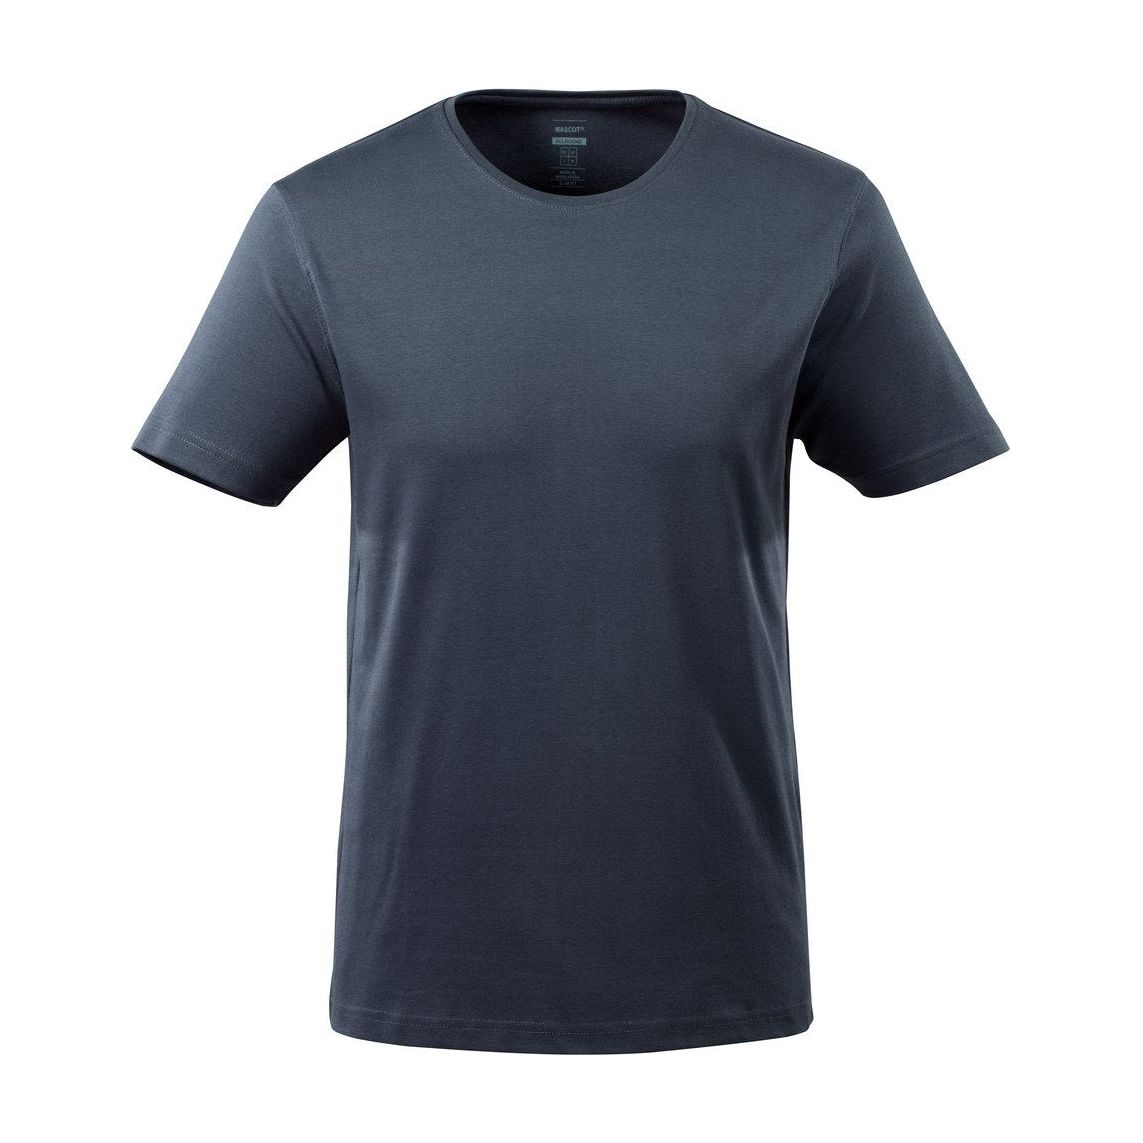 Mascot Vence T-shirt Slim-Fit Dark Navy Blue 51585-967-010 Front